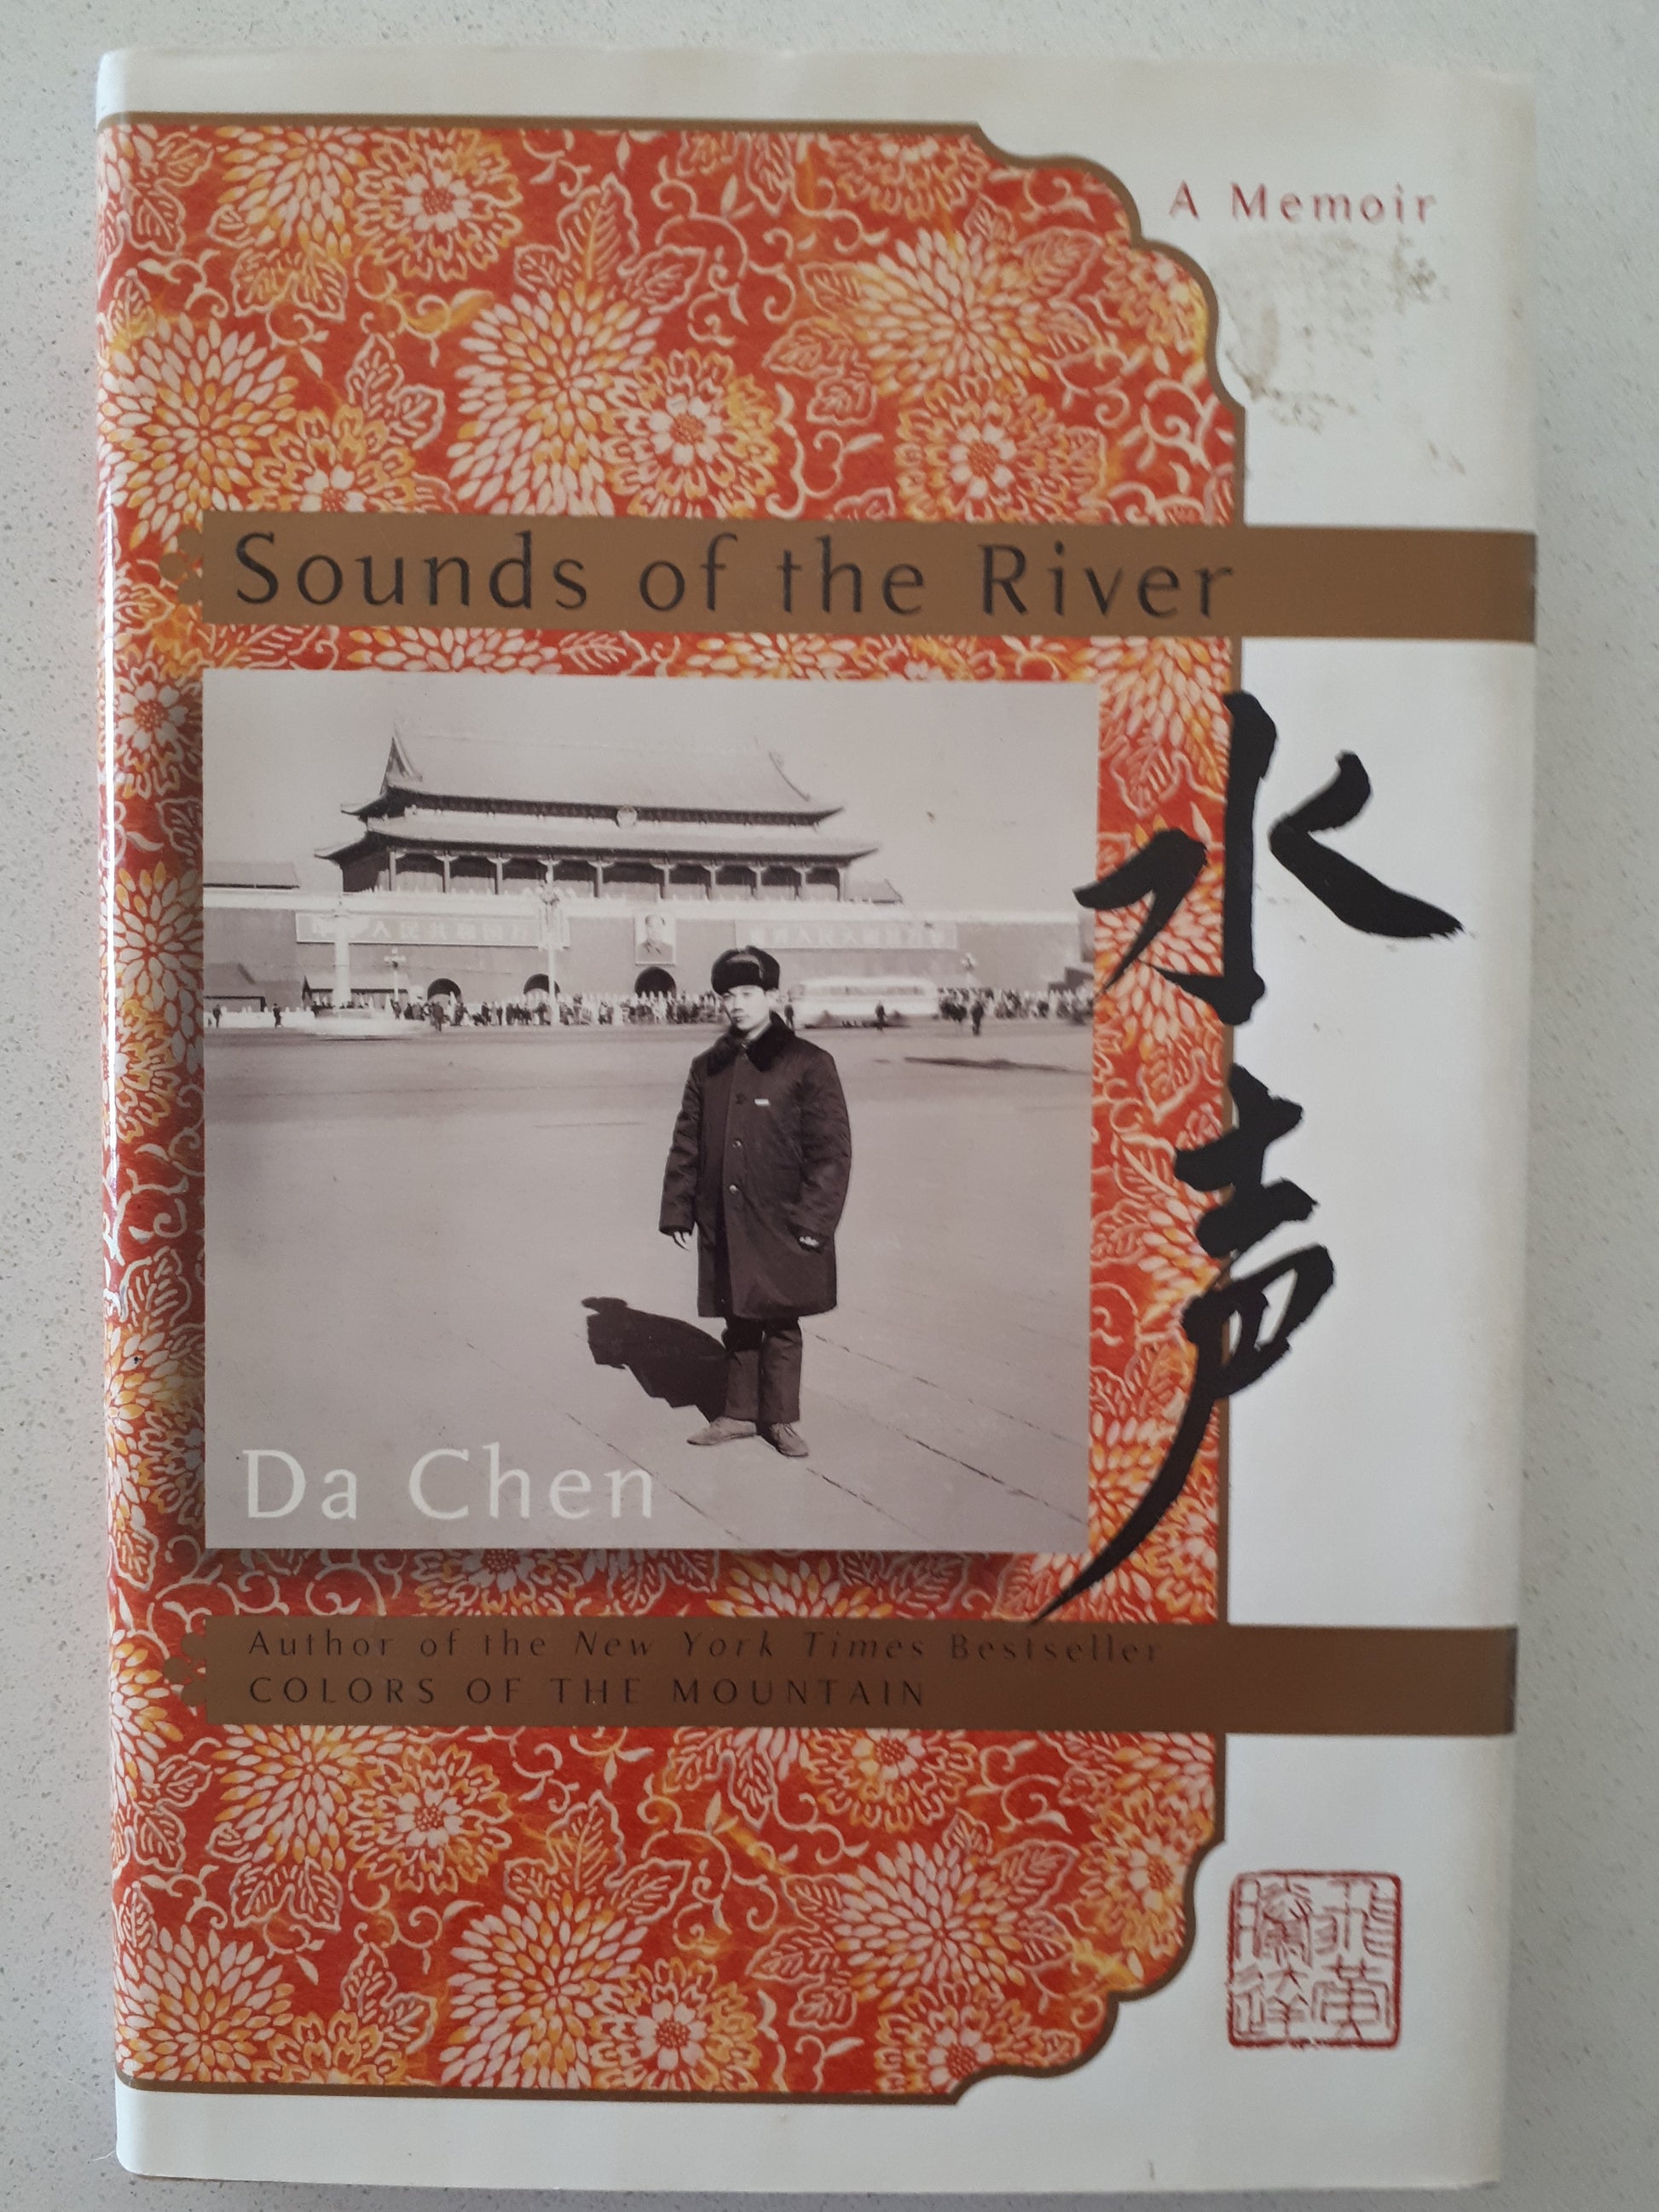 Sounds of the River  A Memoir  by Da Chen